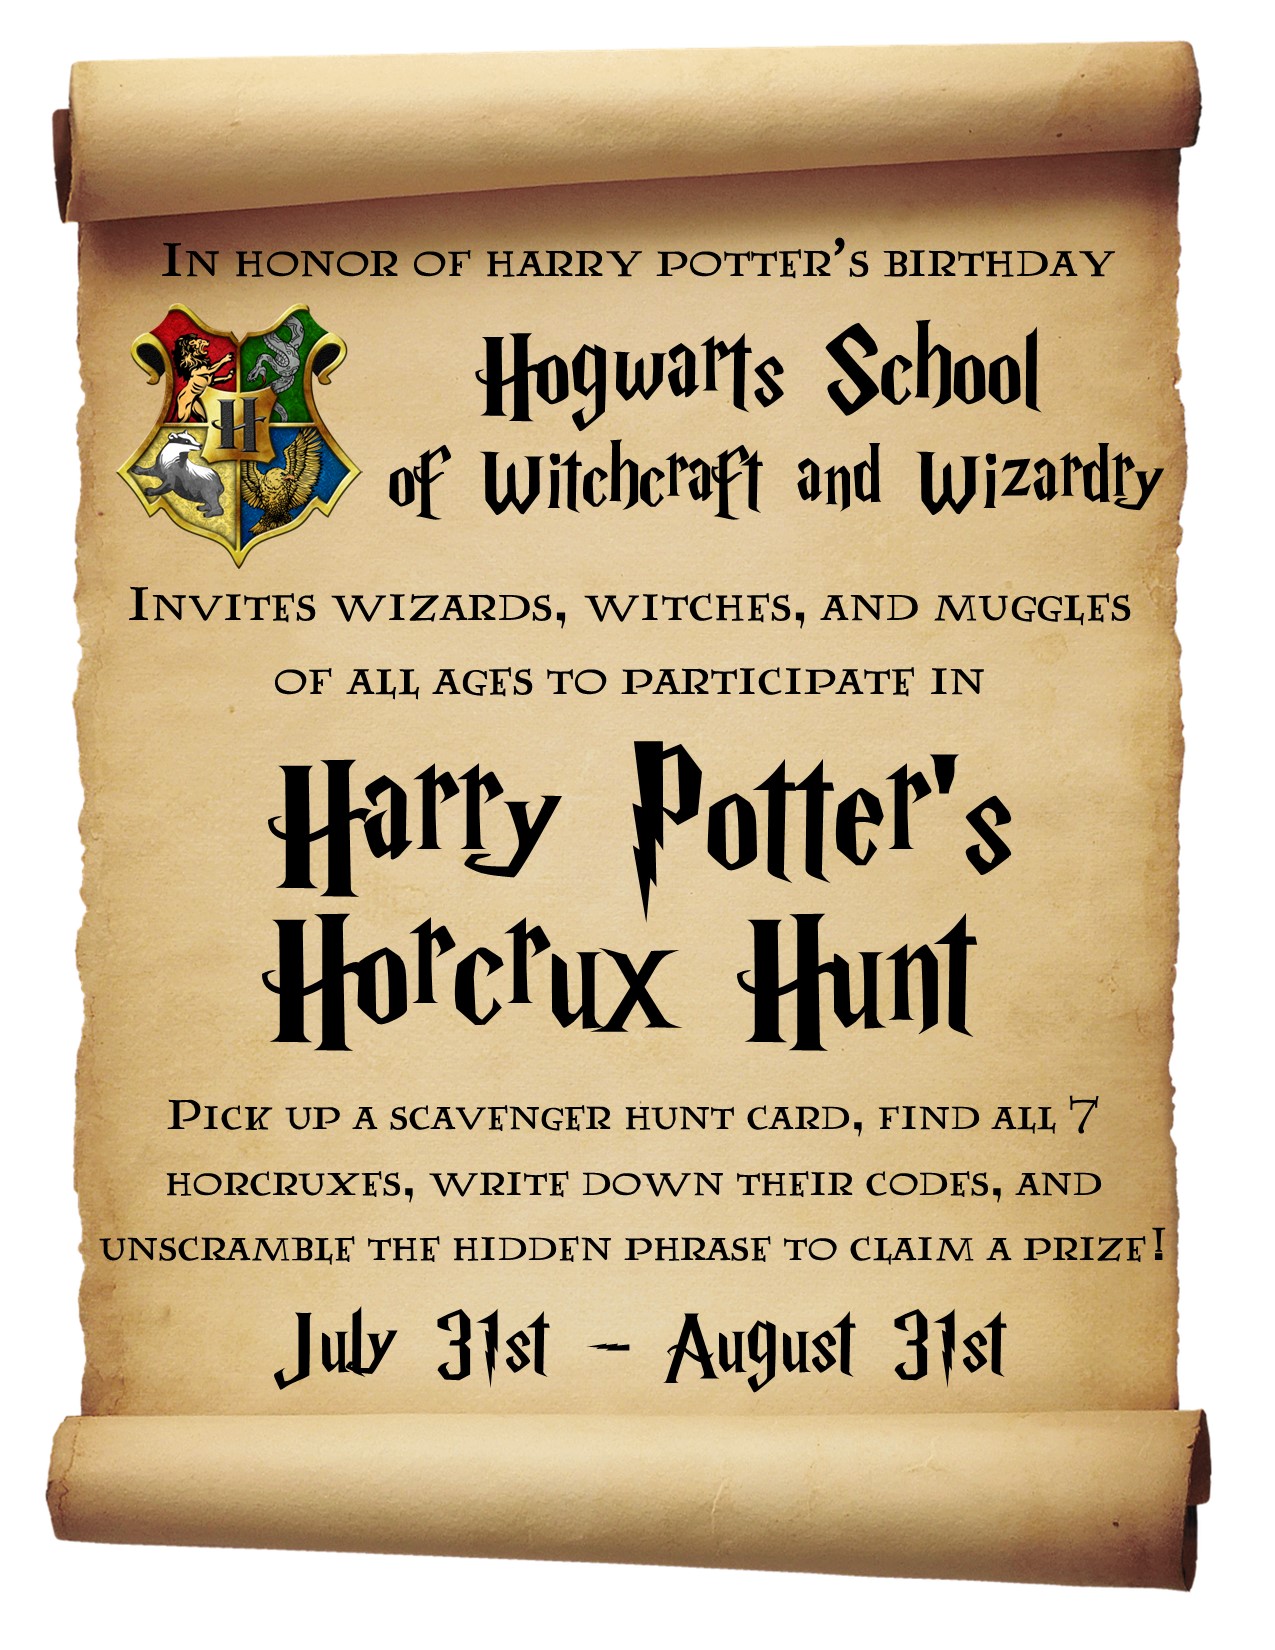 Harry Potter's Horcrux Hunt